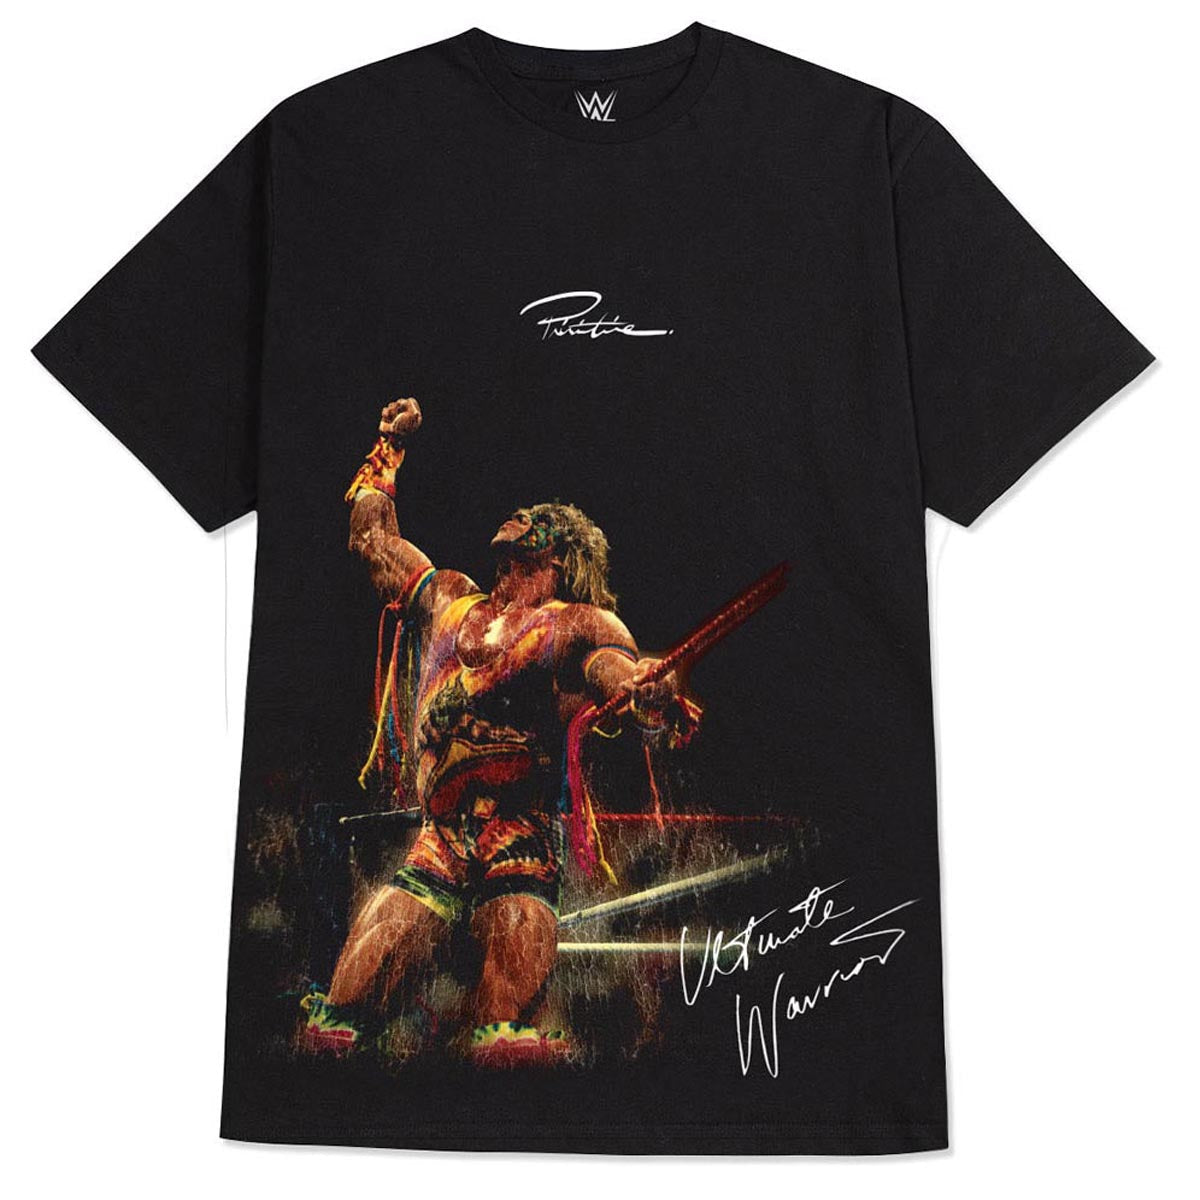 Primitive x WWE Ultimate Warrior T-Shirt - Black image 1